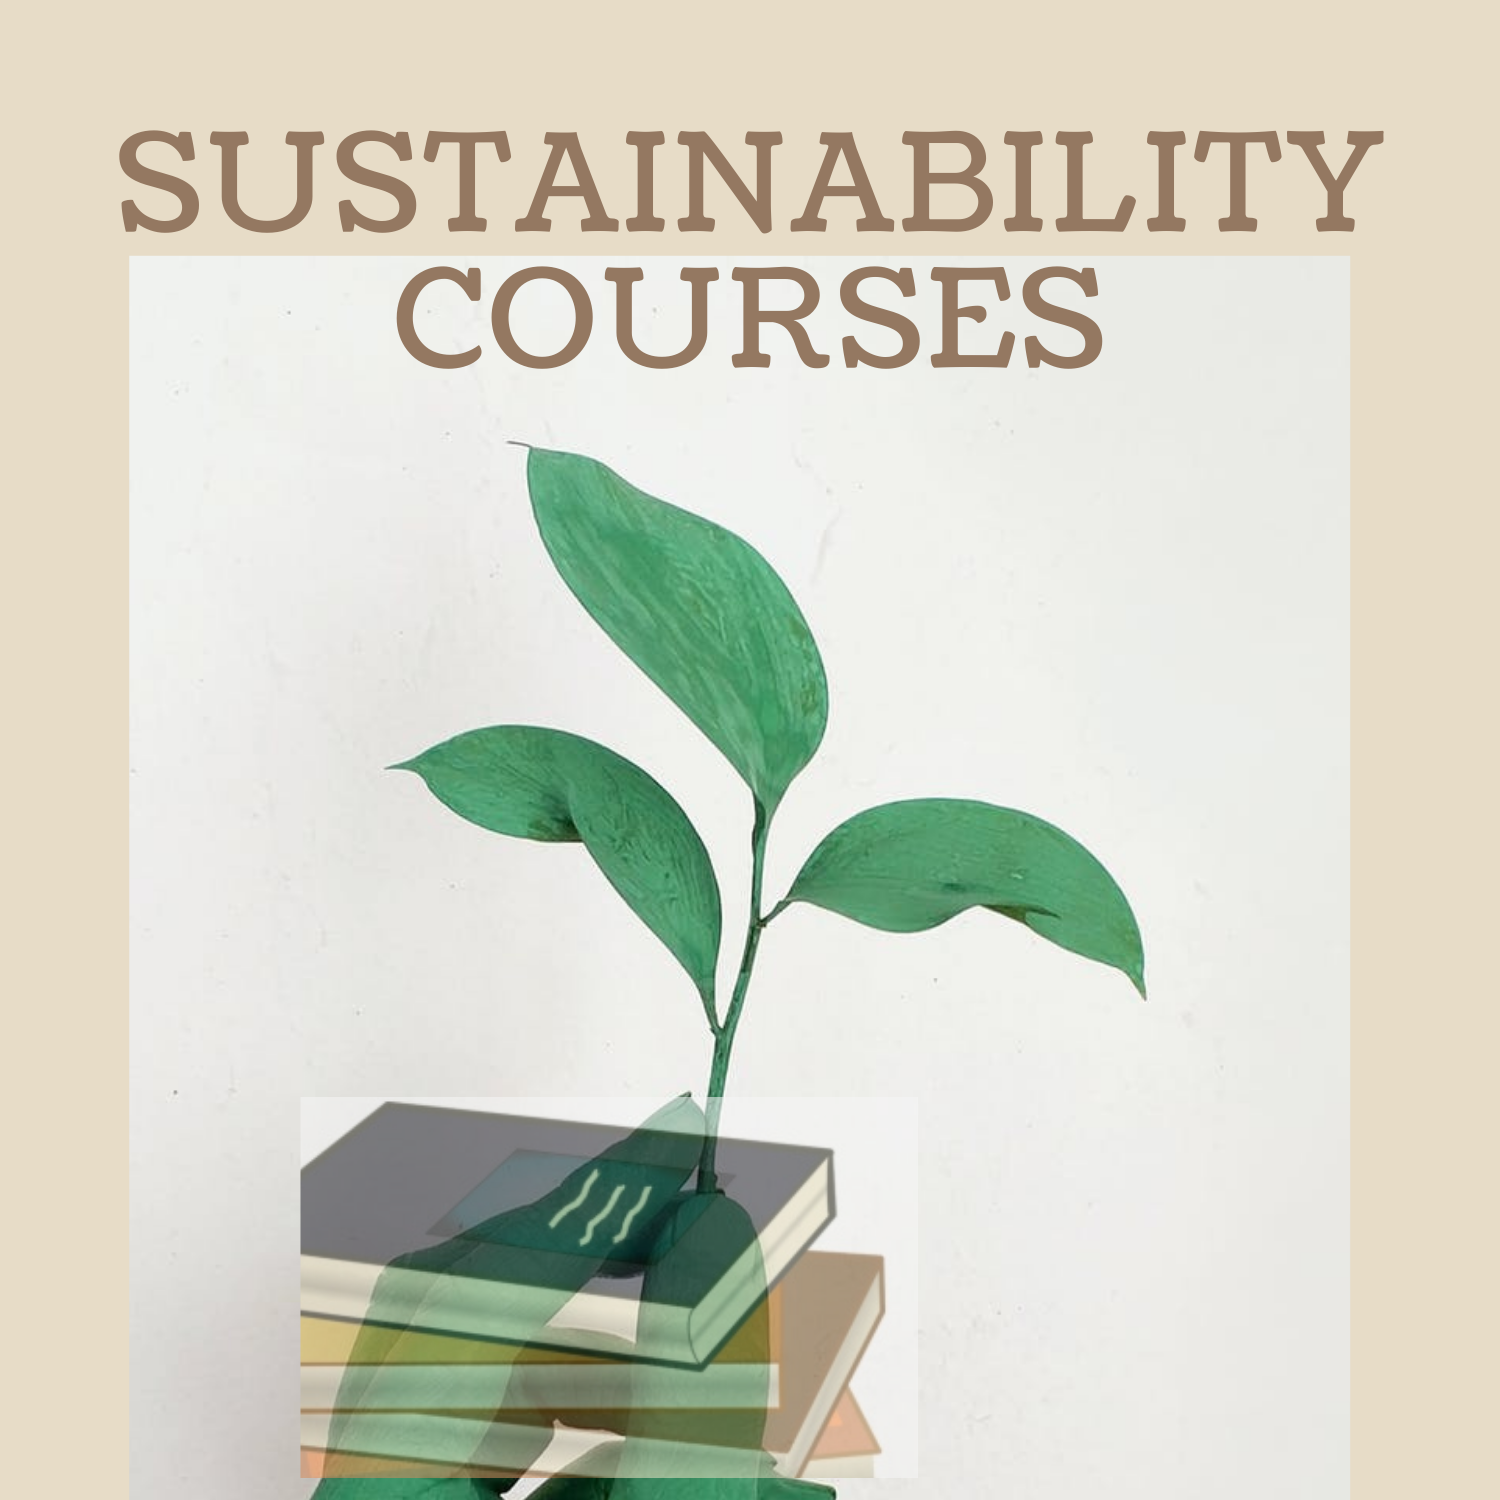 Sustainability Courses